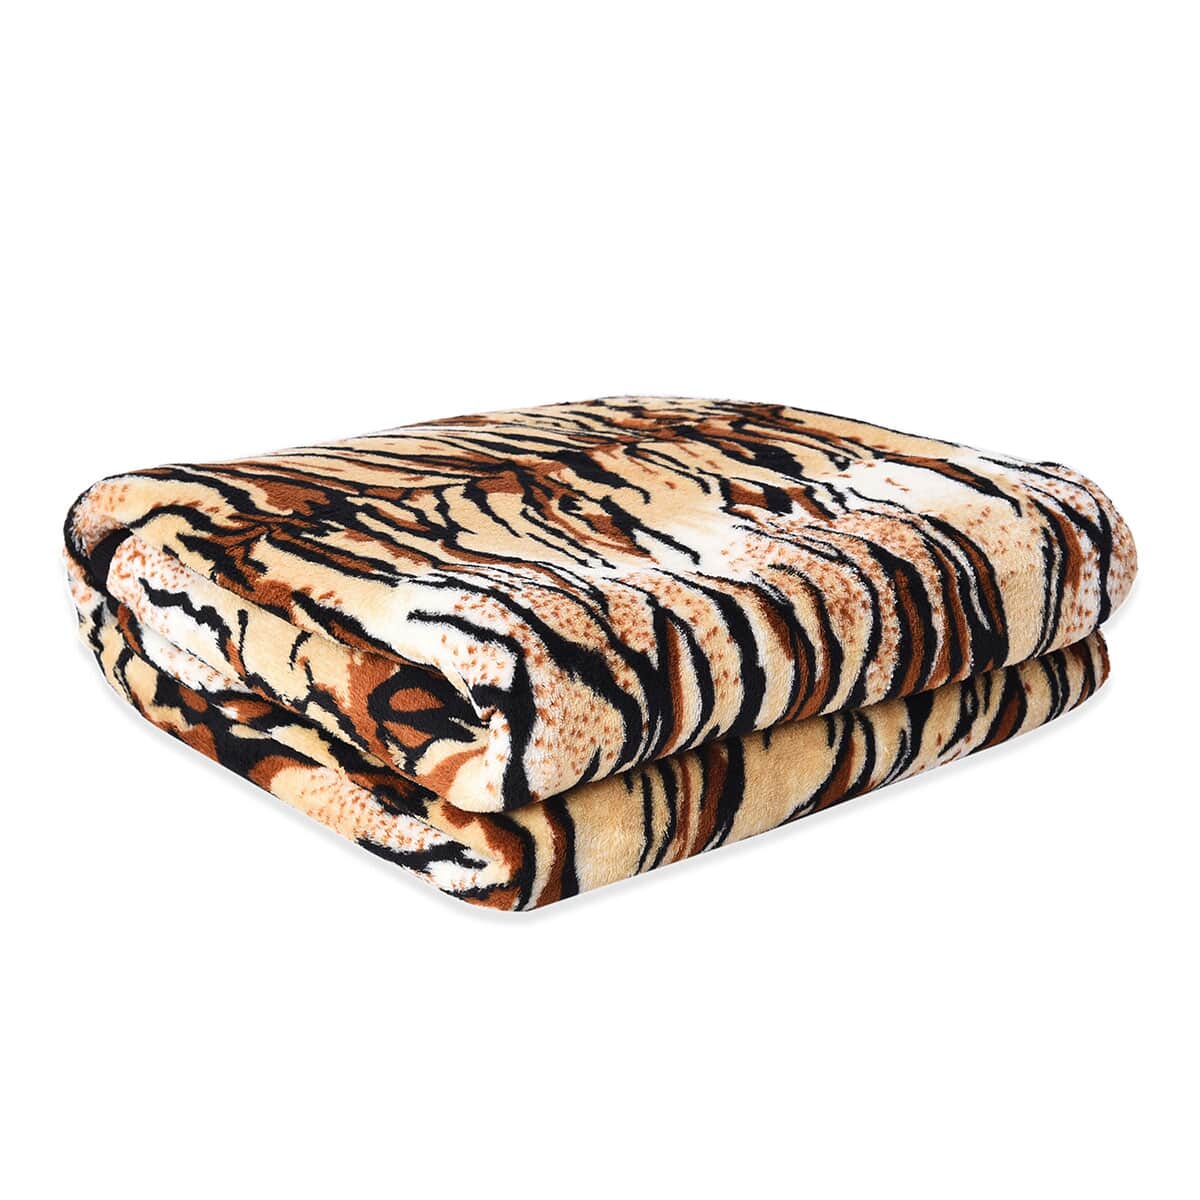 Homesmart Tiger Print Warm & Cozy Coral Fleece Blanket (58x86) image number 3